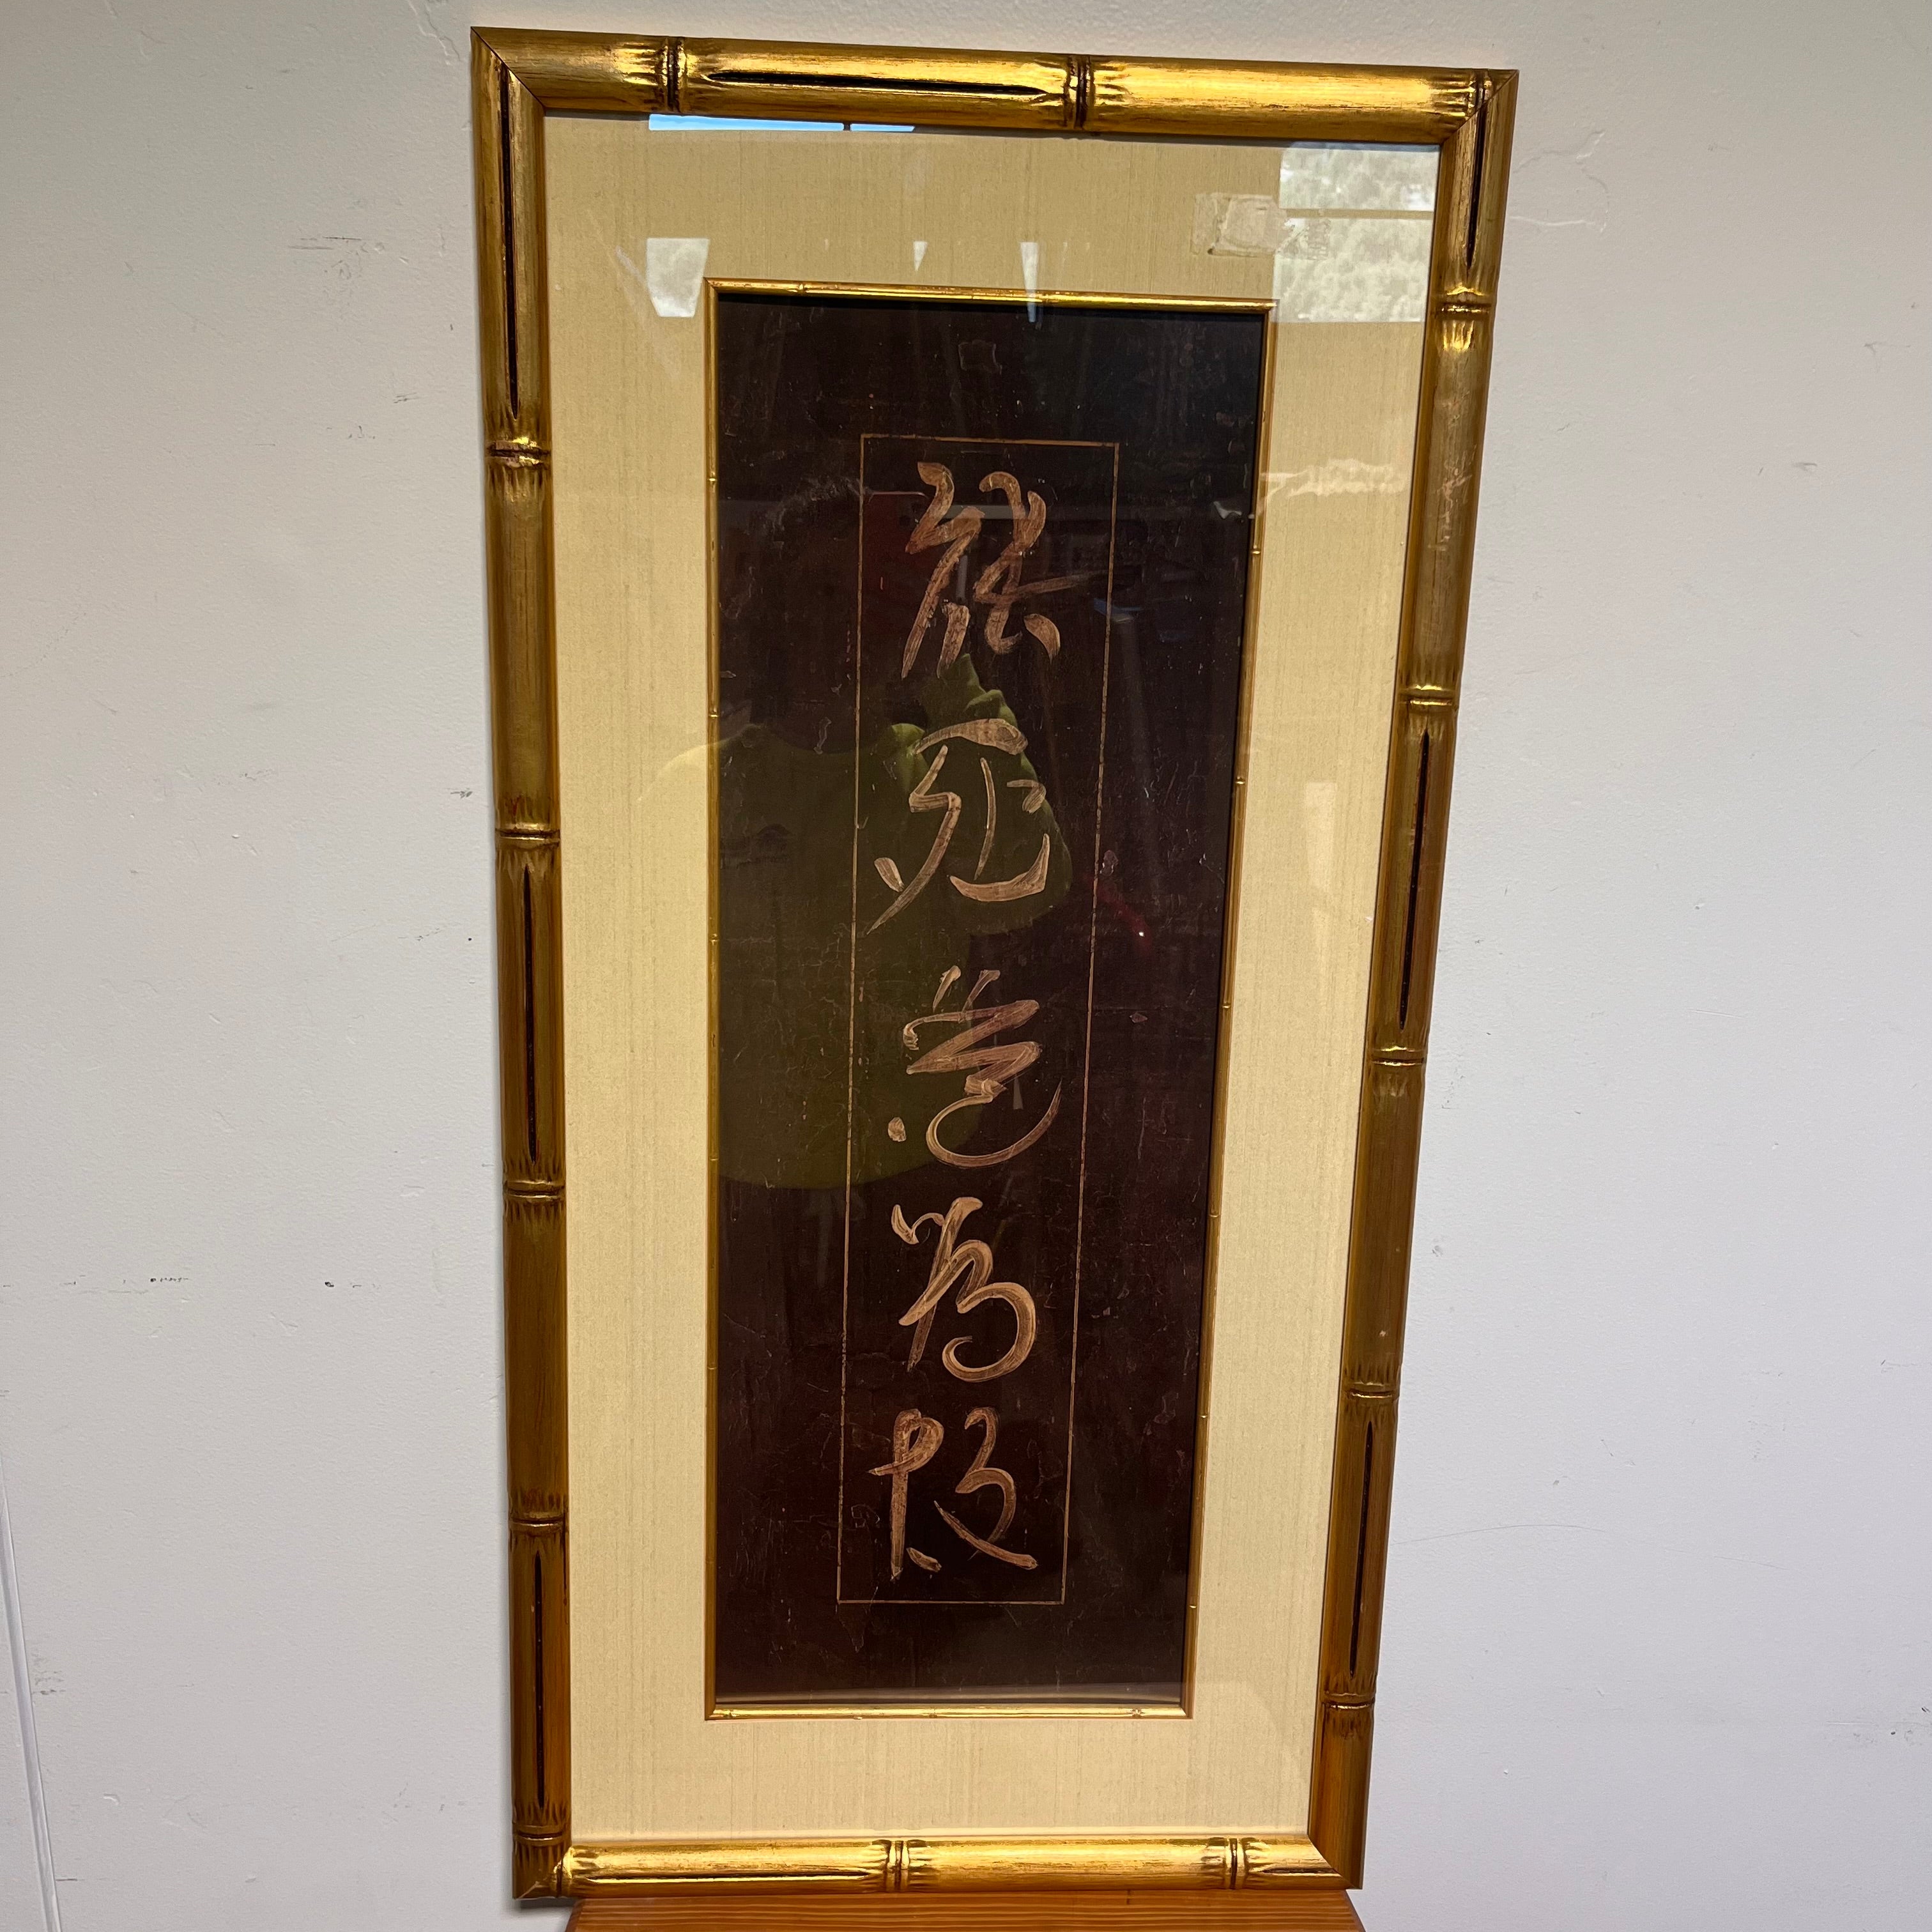 Japanese Calligraphy Wall Art 19.25"x 39"